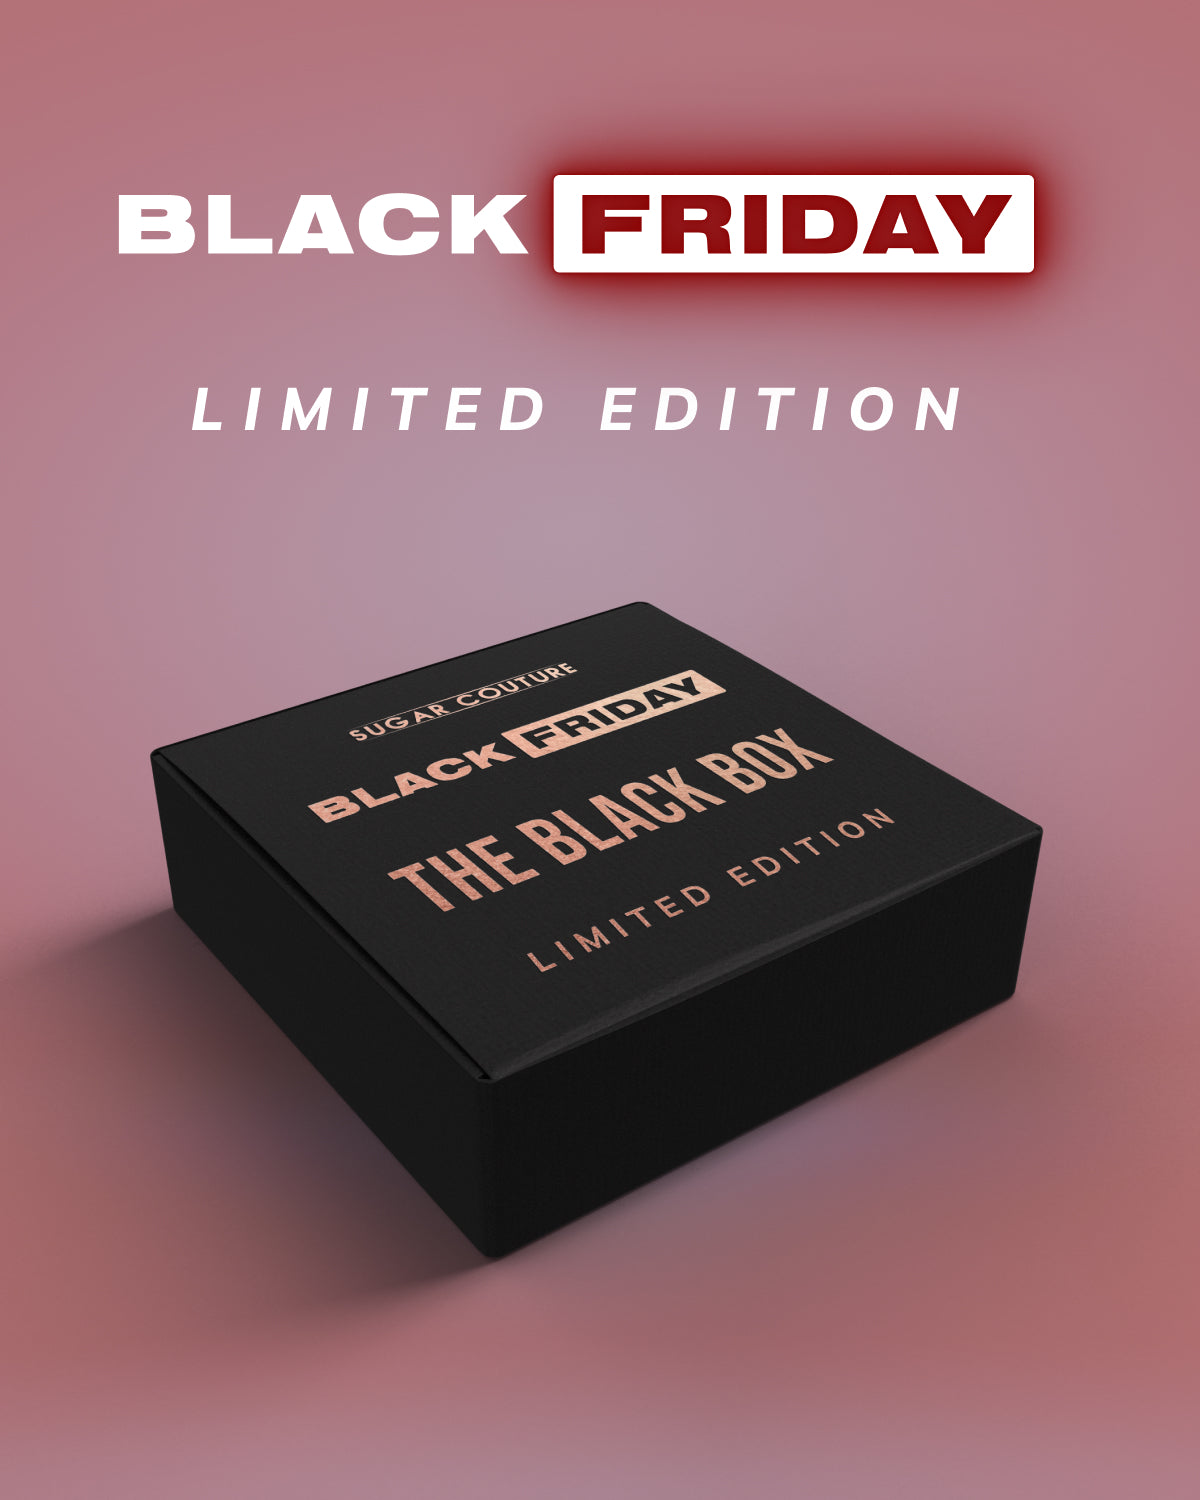 [Editie Limitata] The Black Box - Black Friday Special